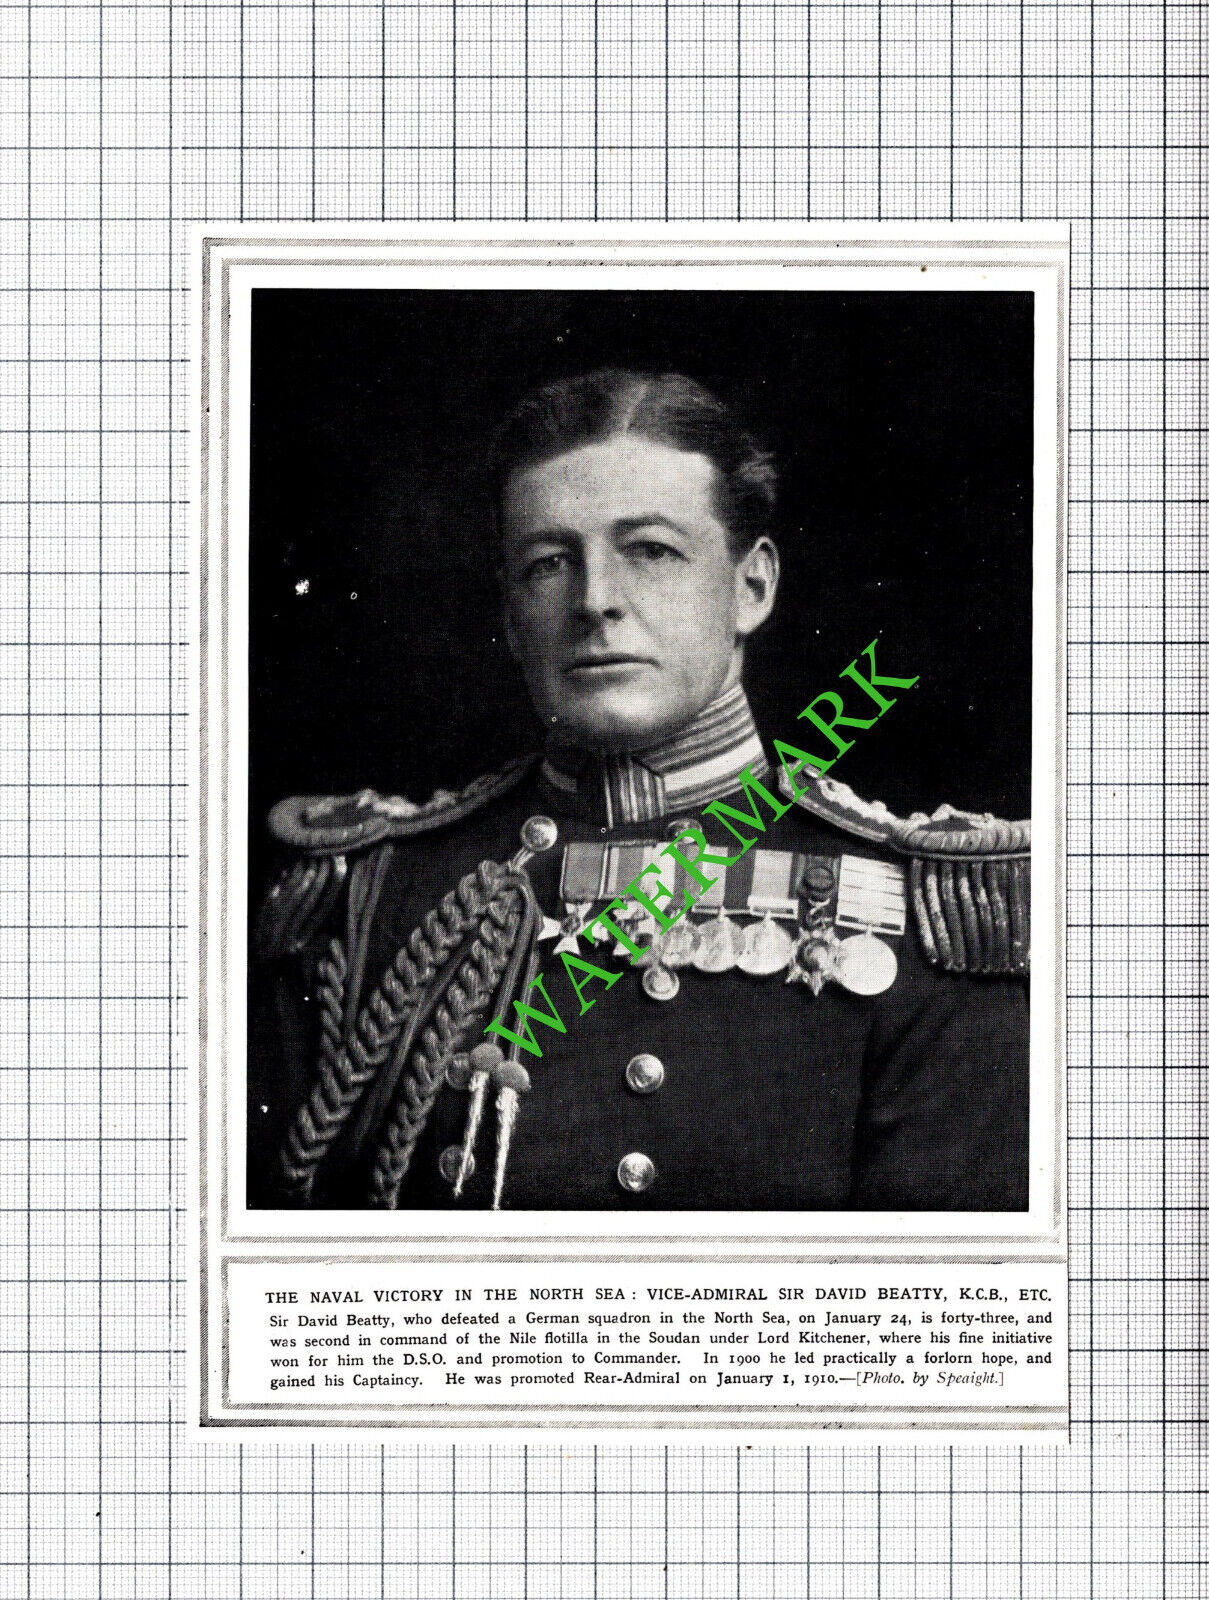 Vice Admiral Sir David Beatty - 1915 Cutting